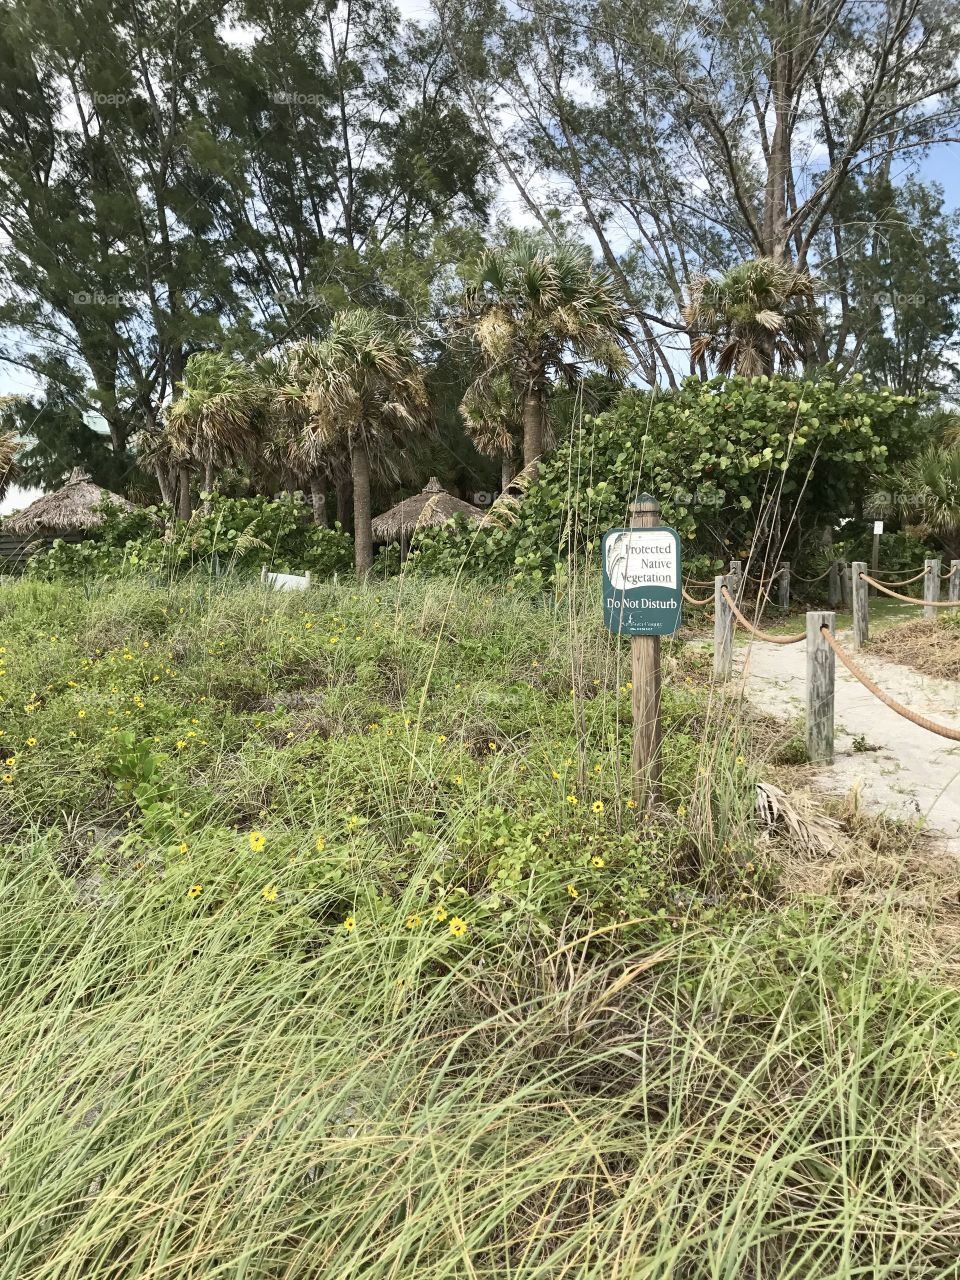 Turtle beach sign